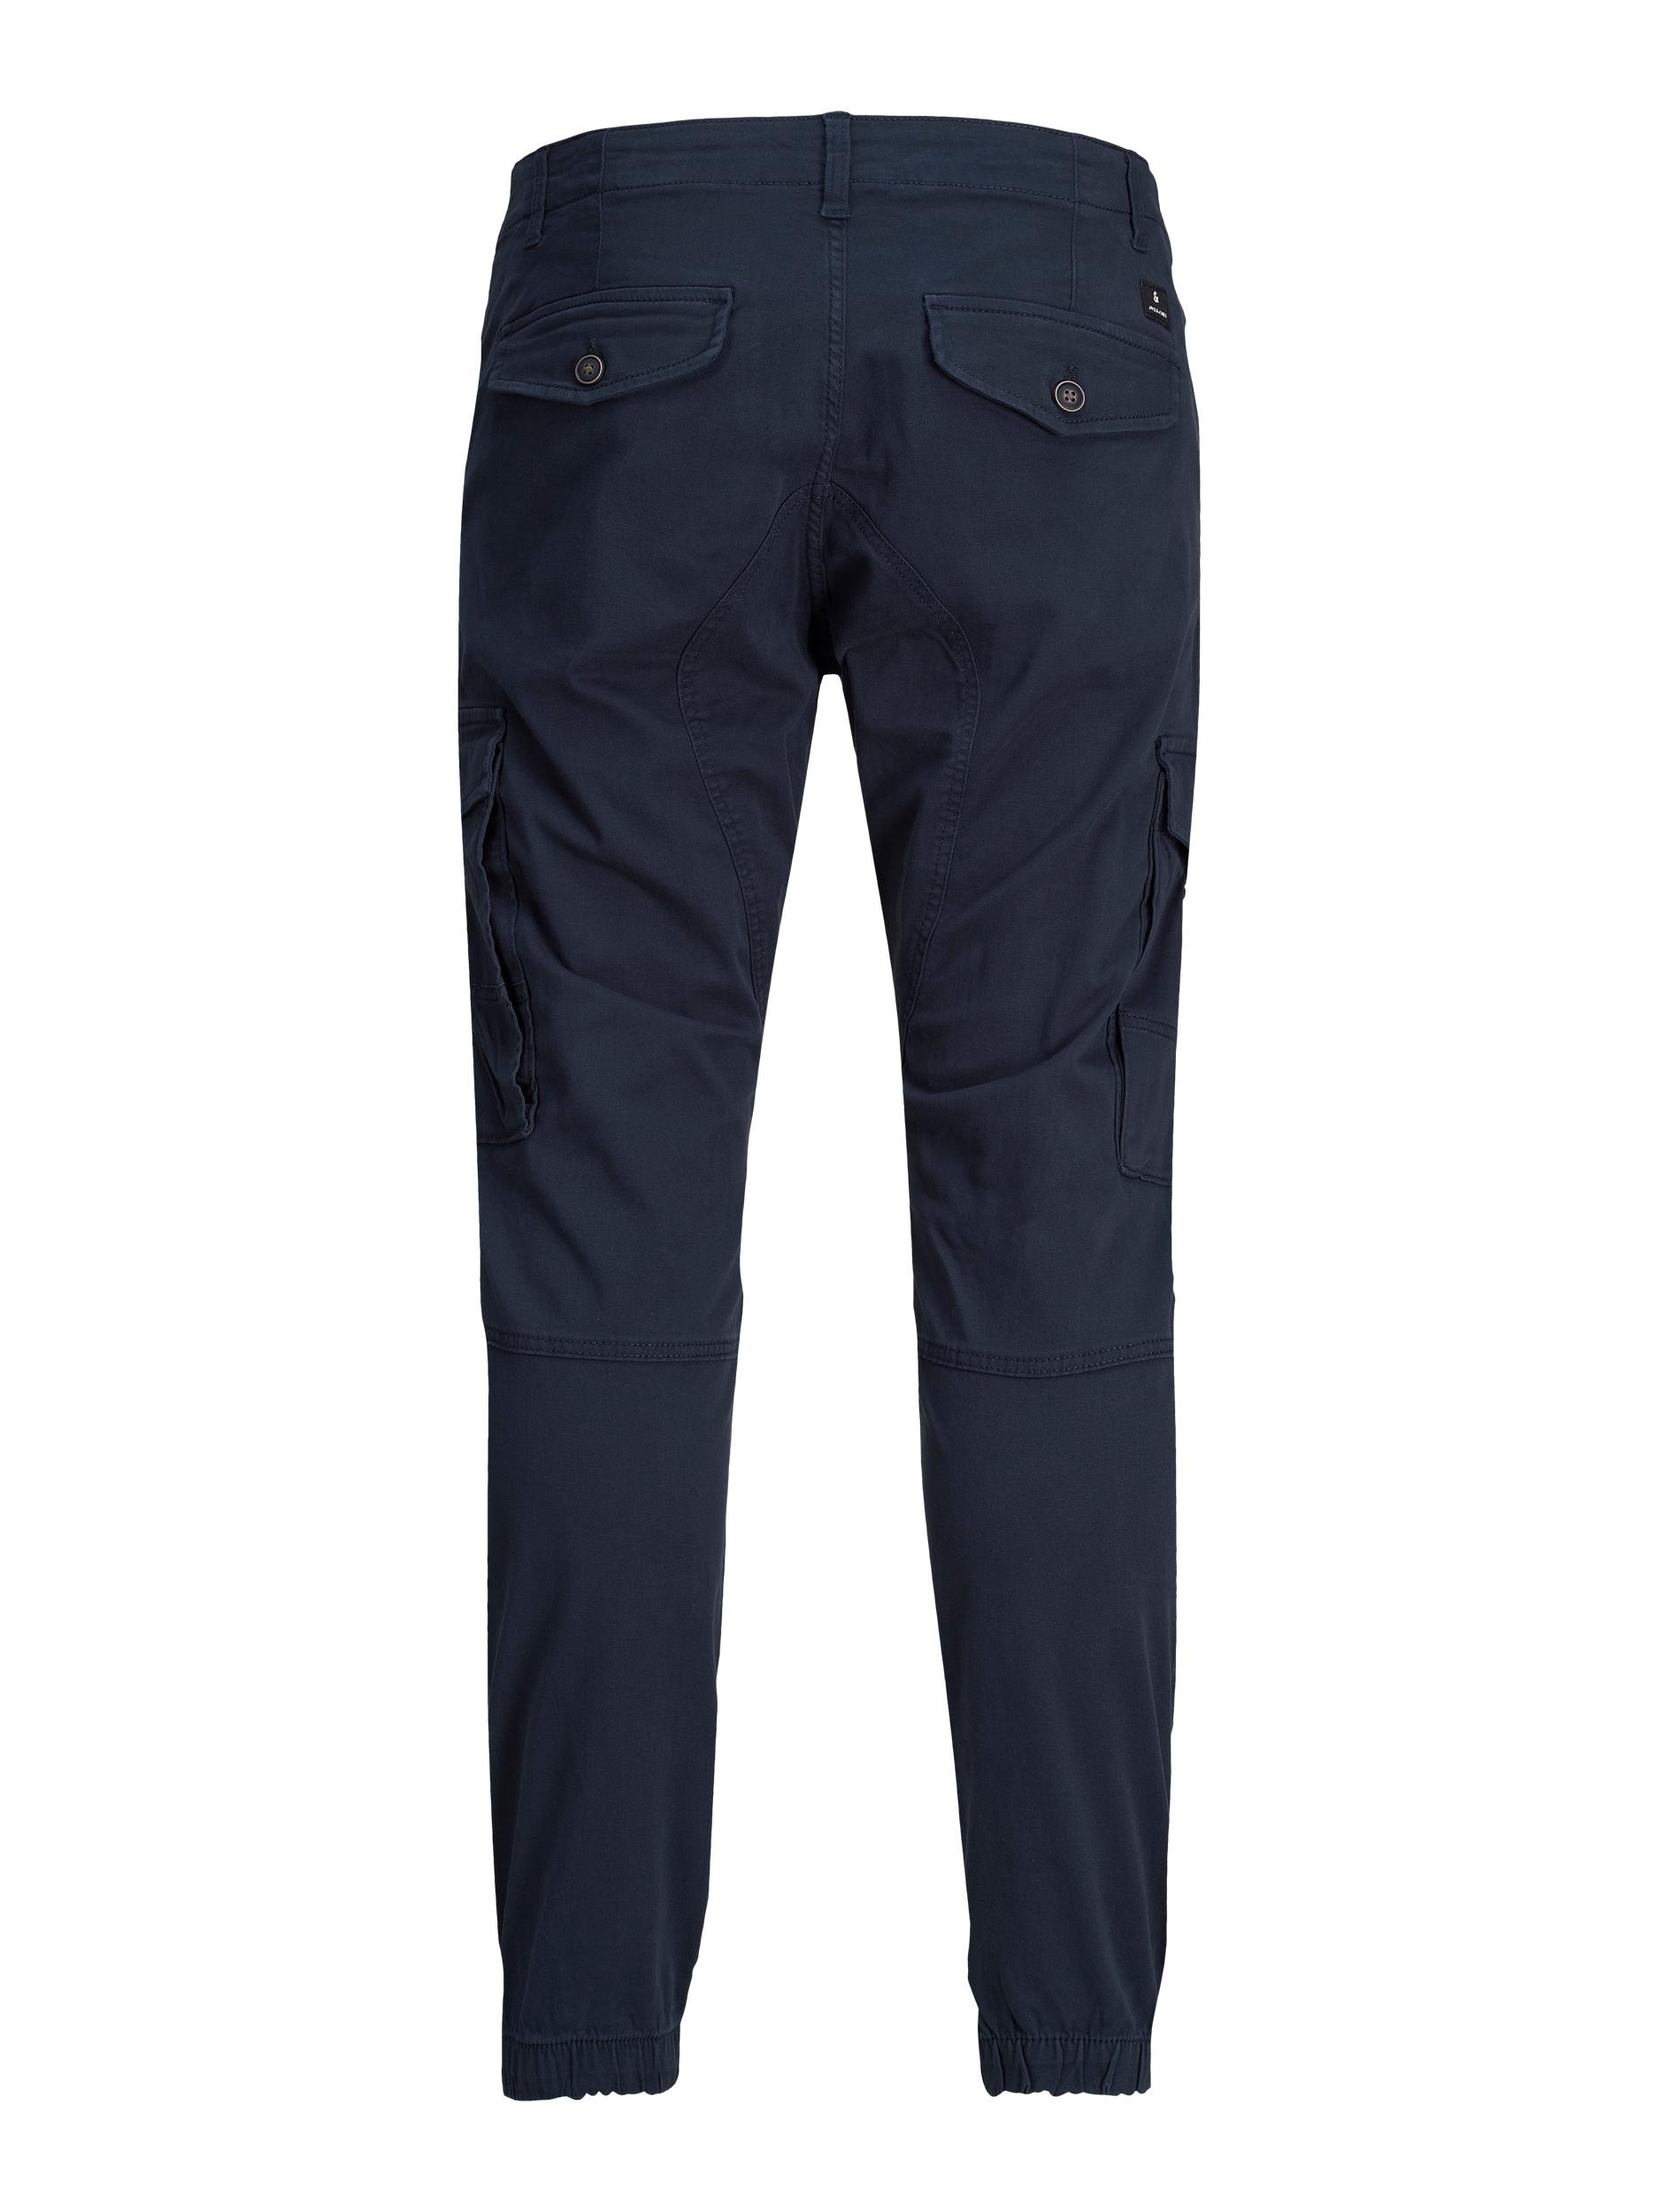 Pantaloni cargo slim fit, Blu, large